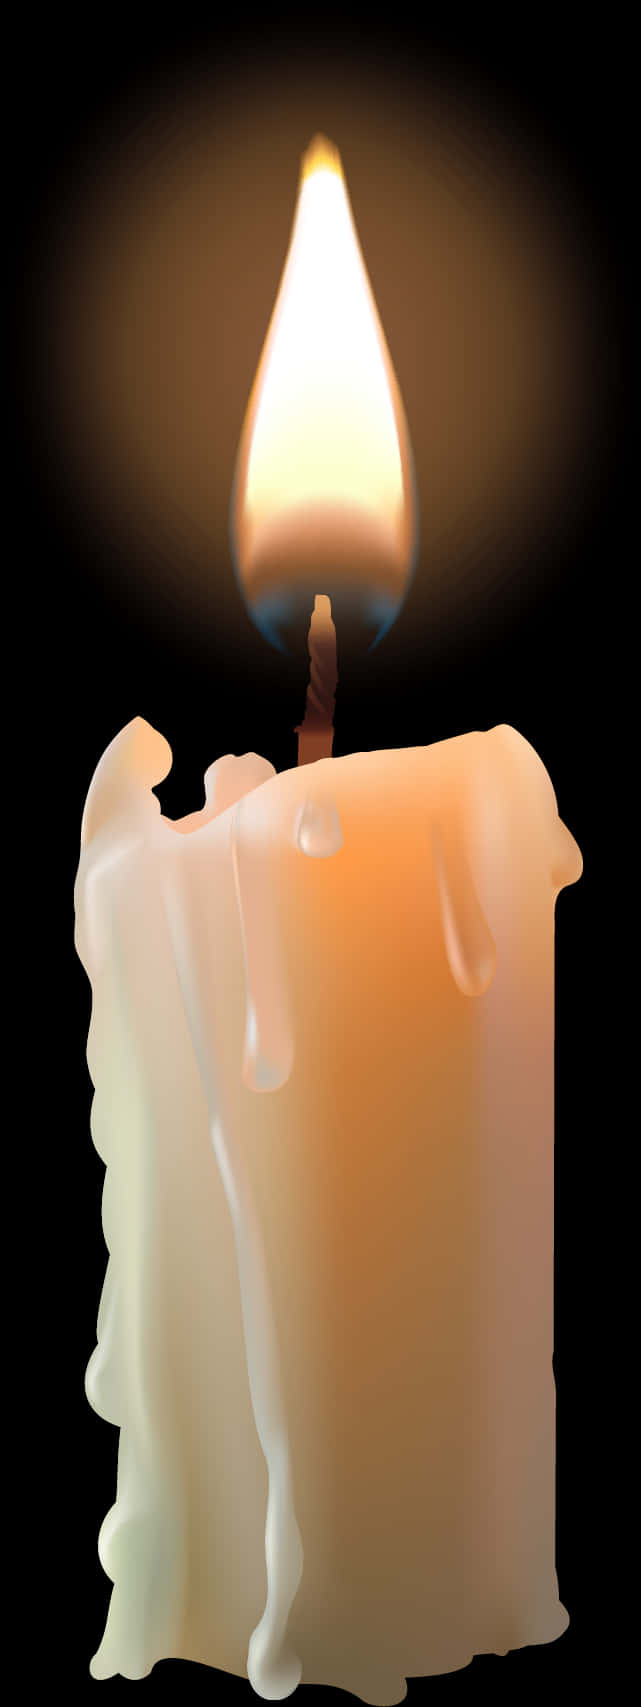 Burning Candlein Darkness.jpg PNG